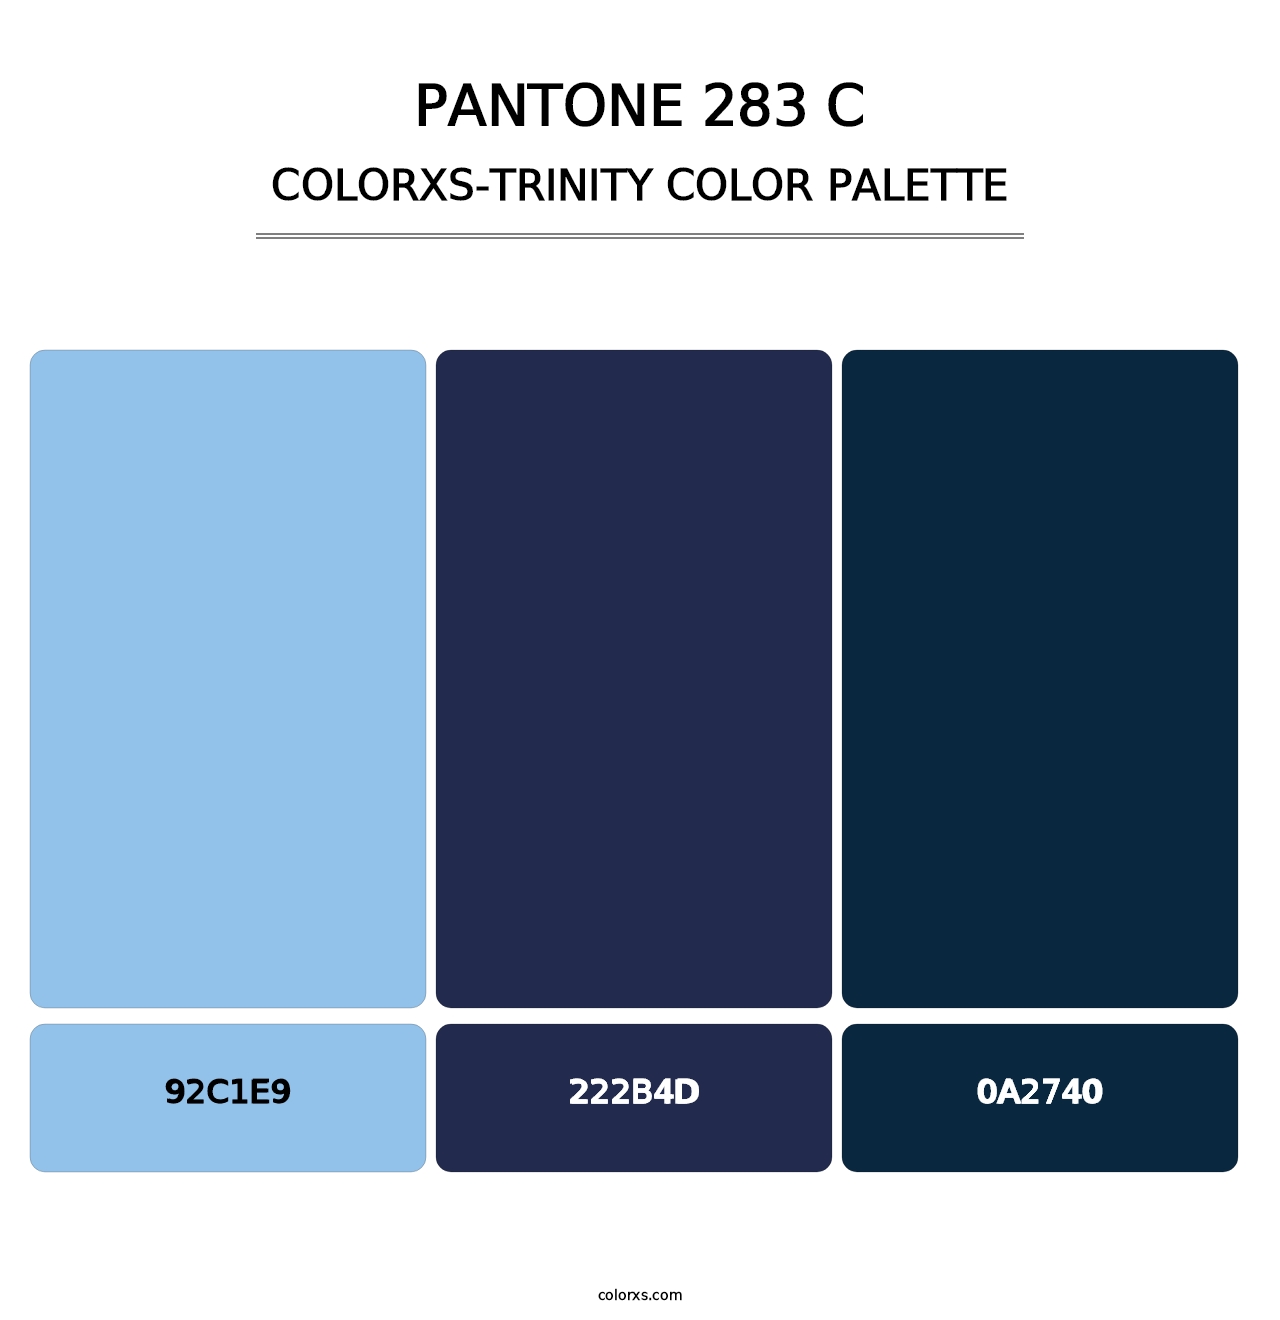 PANTONE 283 C - Colorxs Trinity Palette